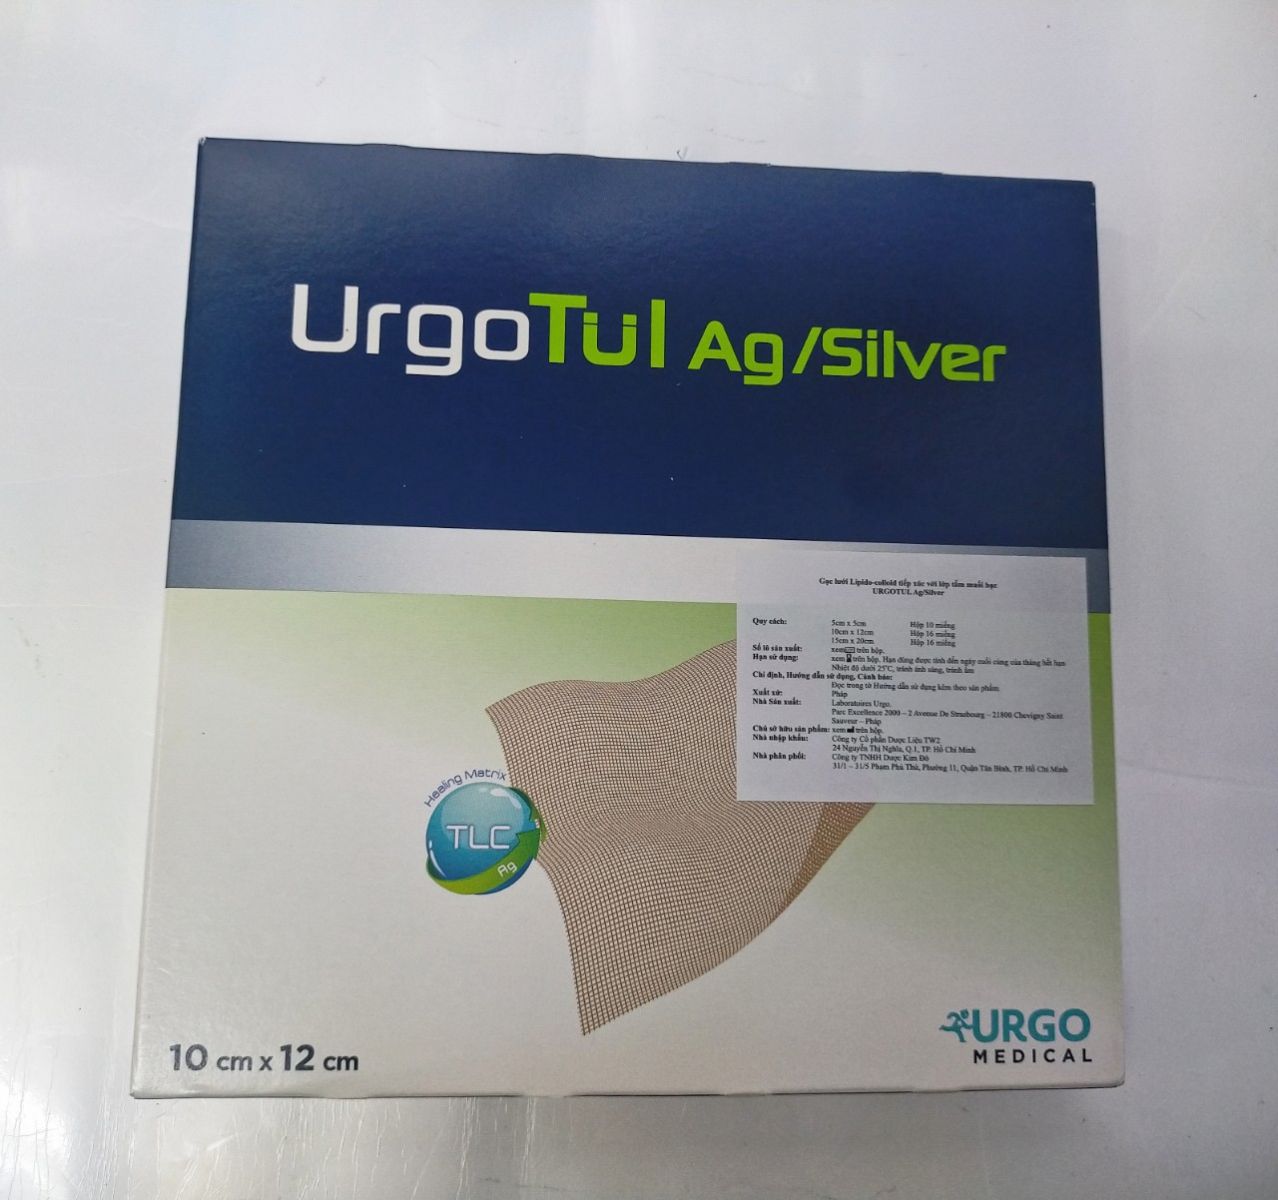 Gạc lưới UrgoTul AG/Sliver (10cm x 12cm)